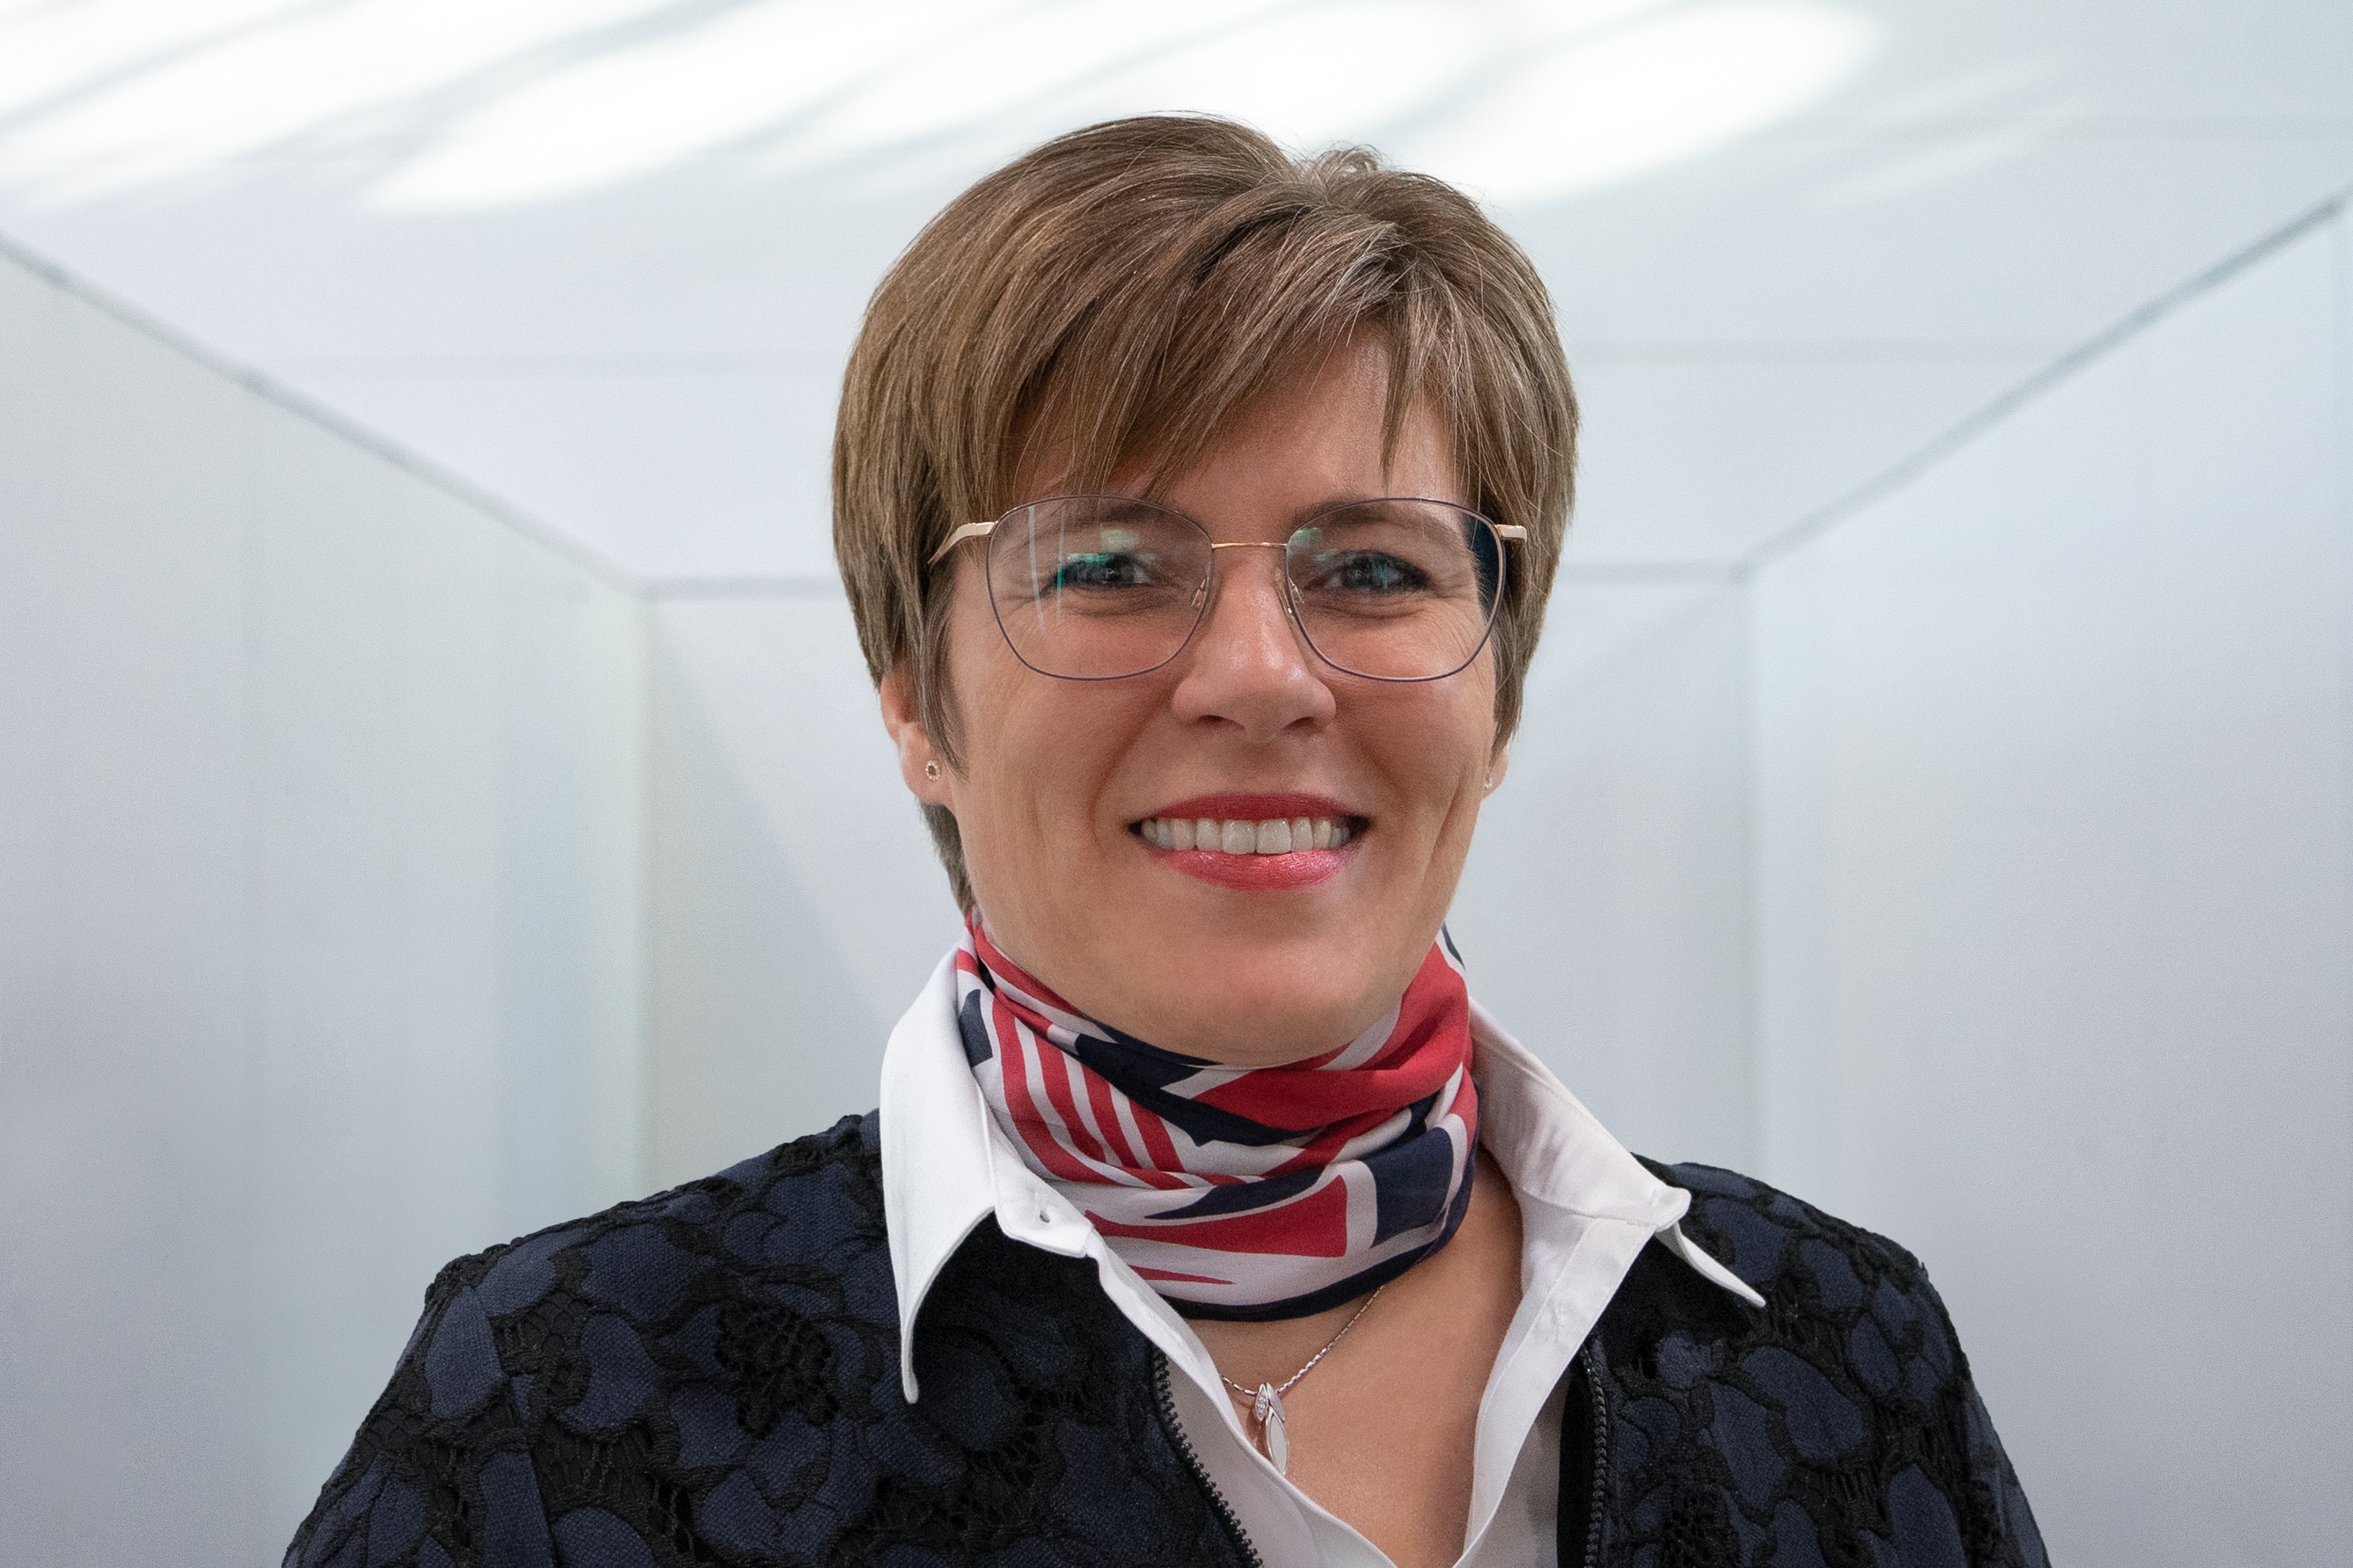 Mrs. Sandra Kugler, Sales and Marketing Director, Viprotron GmbH